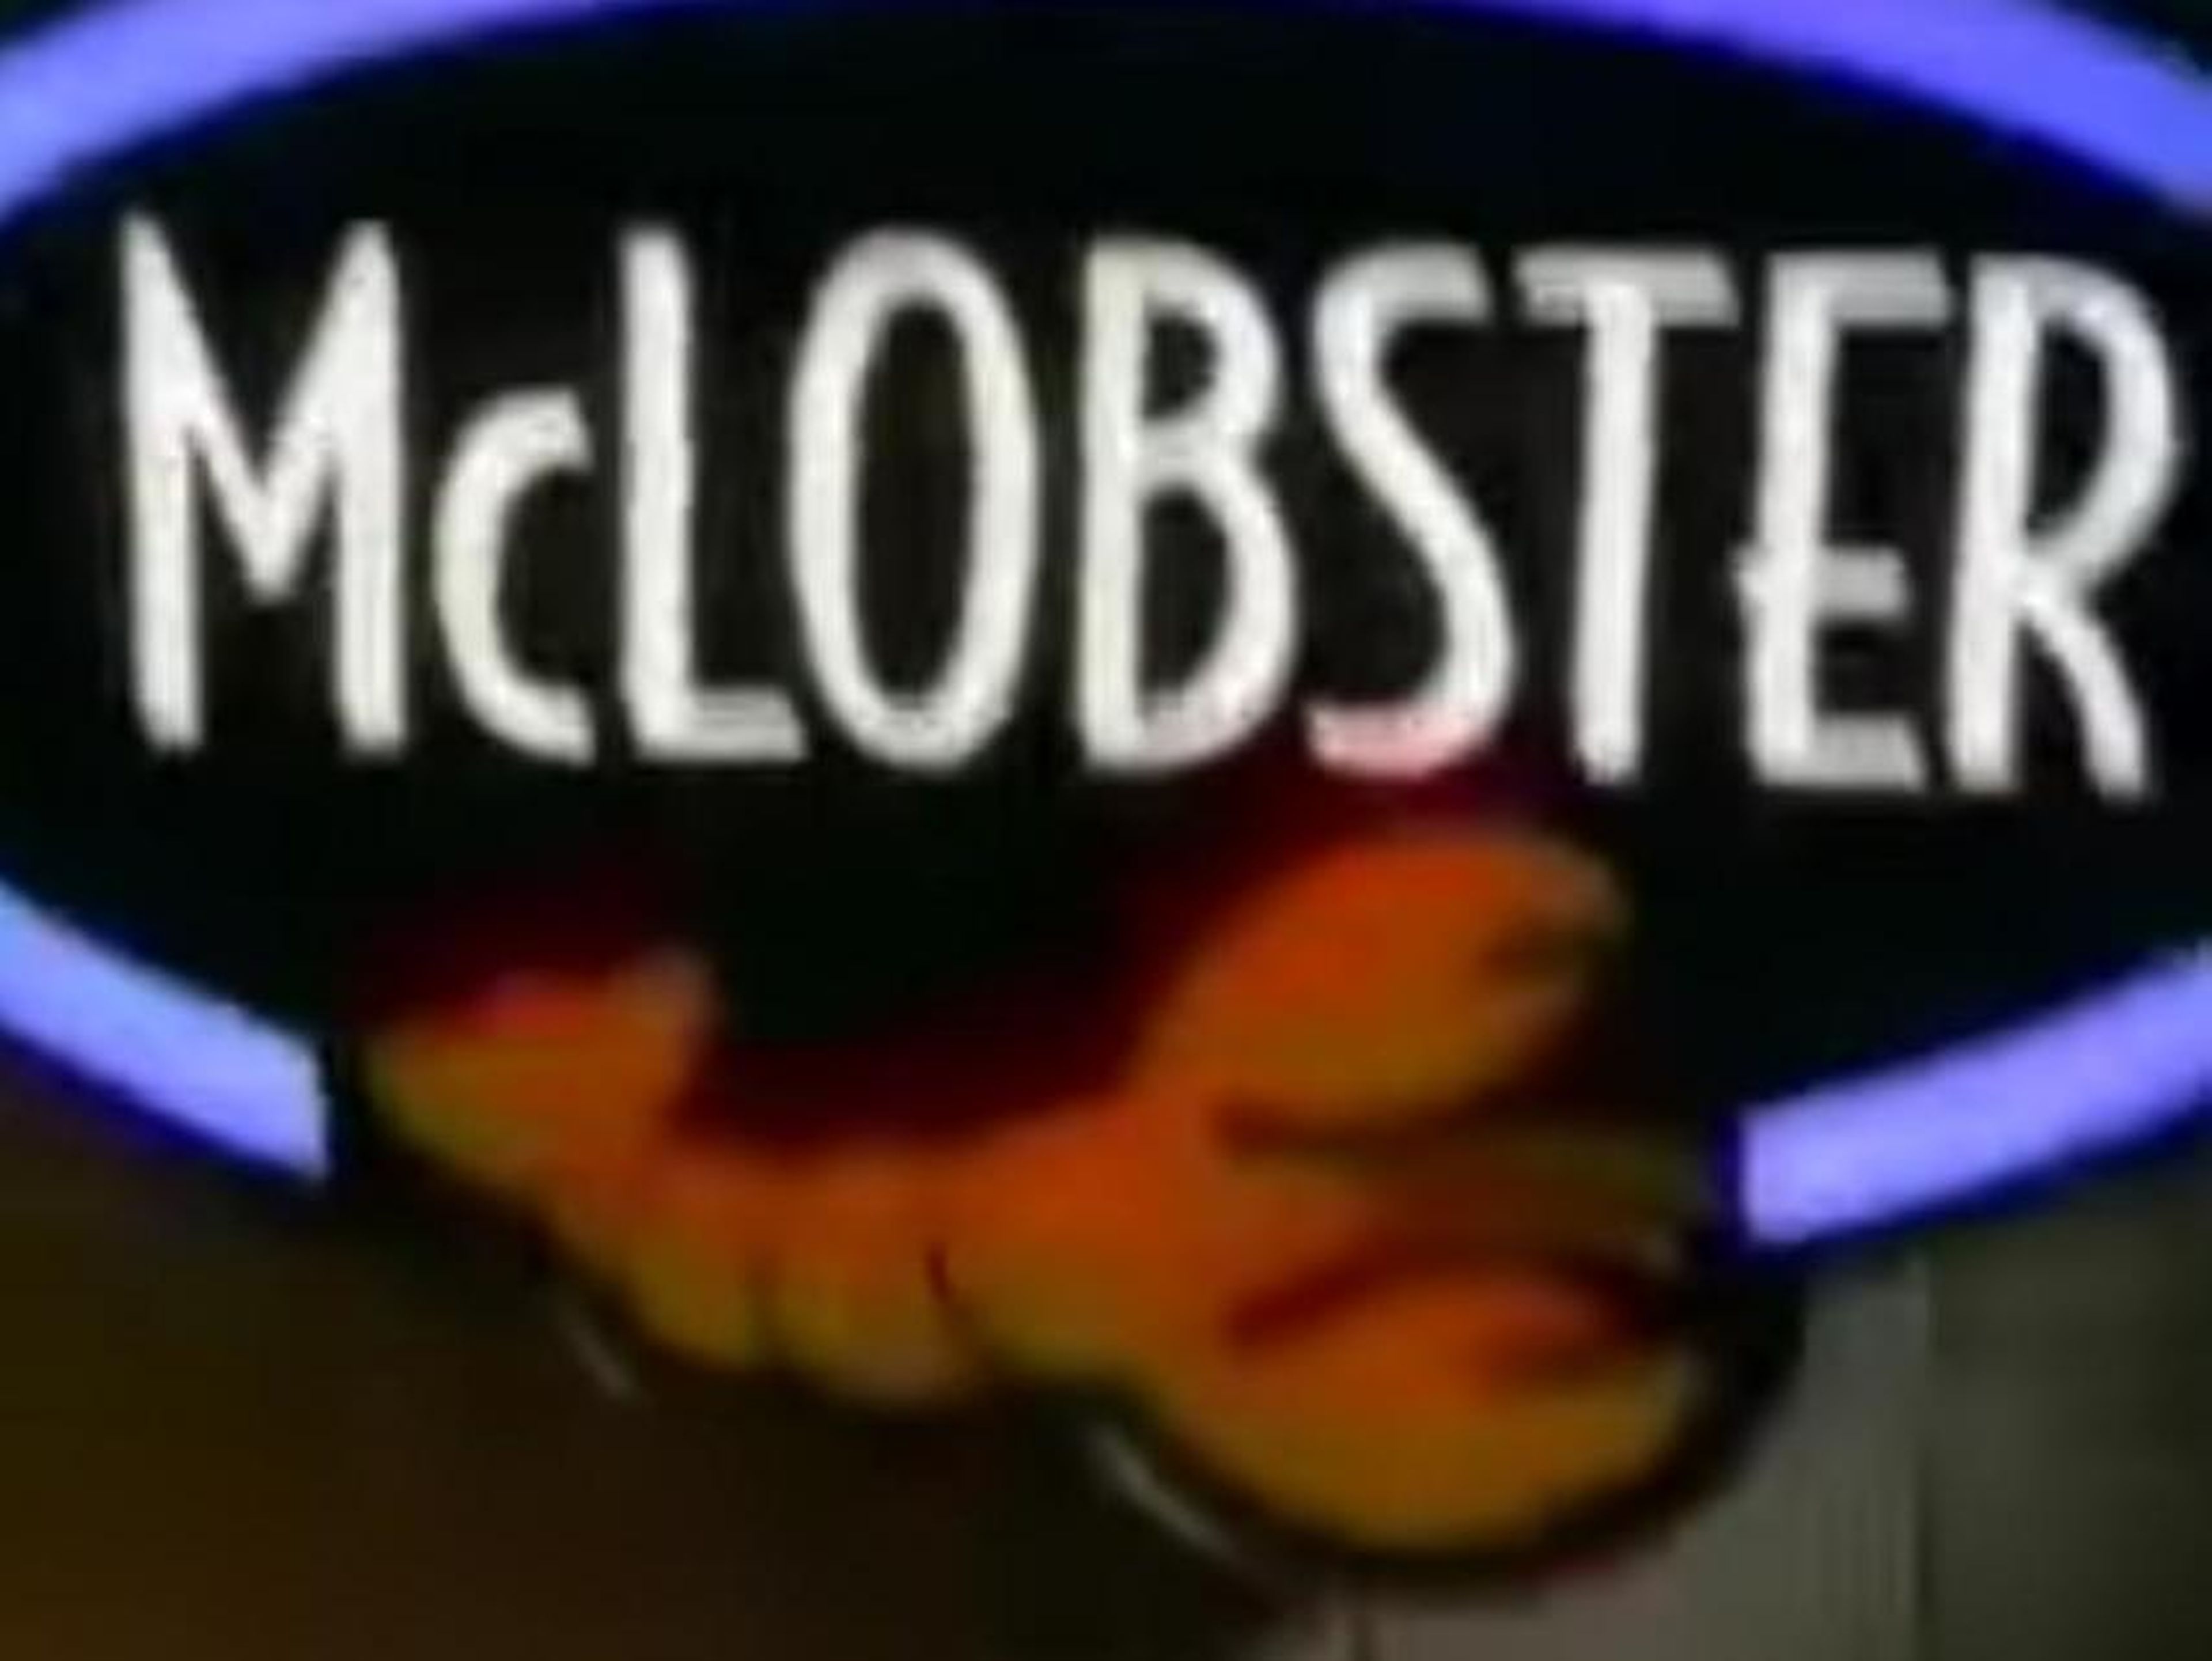 McLobster